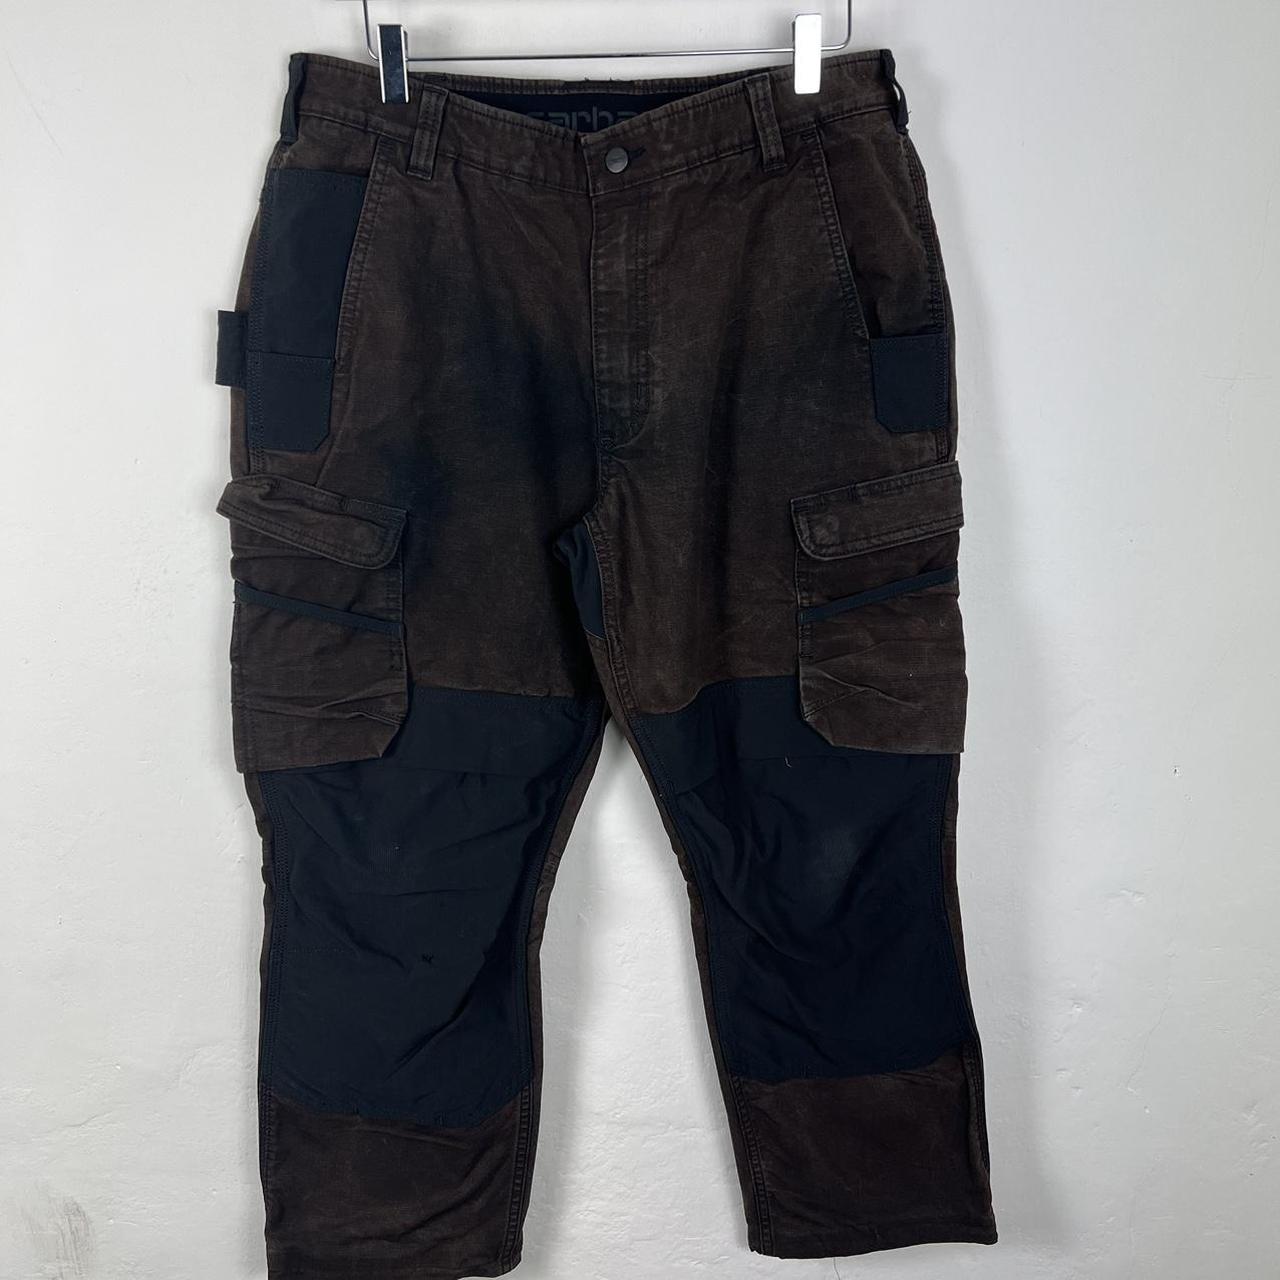 Carhartt workwear trousers 36x30